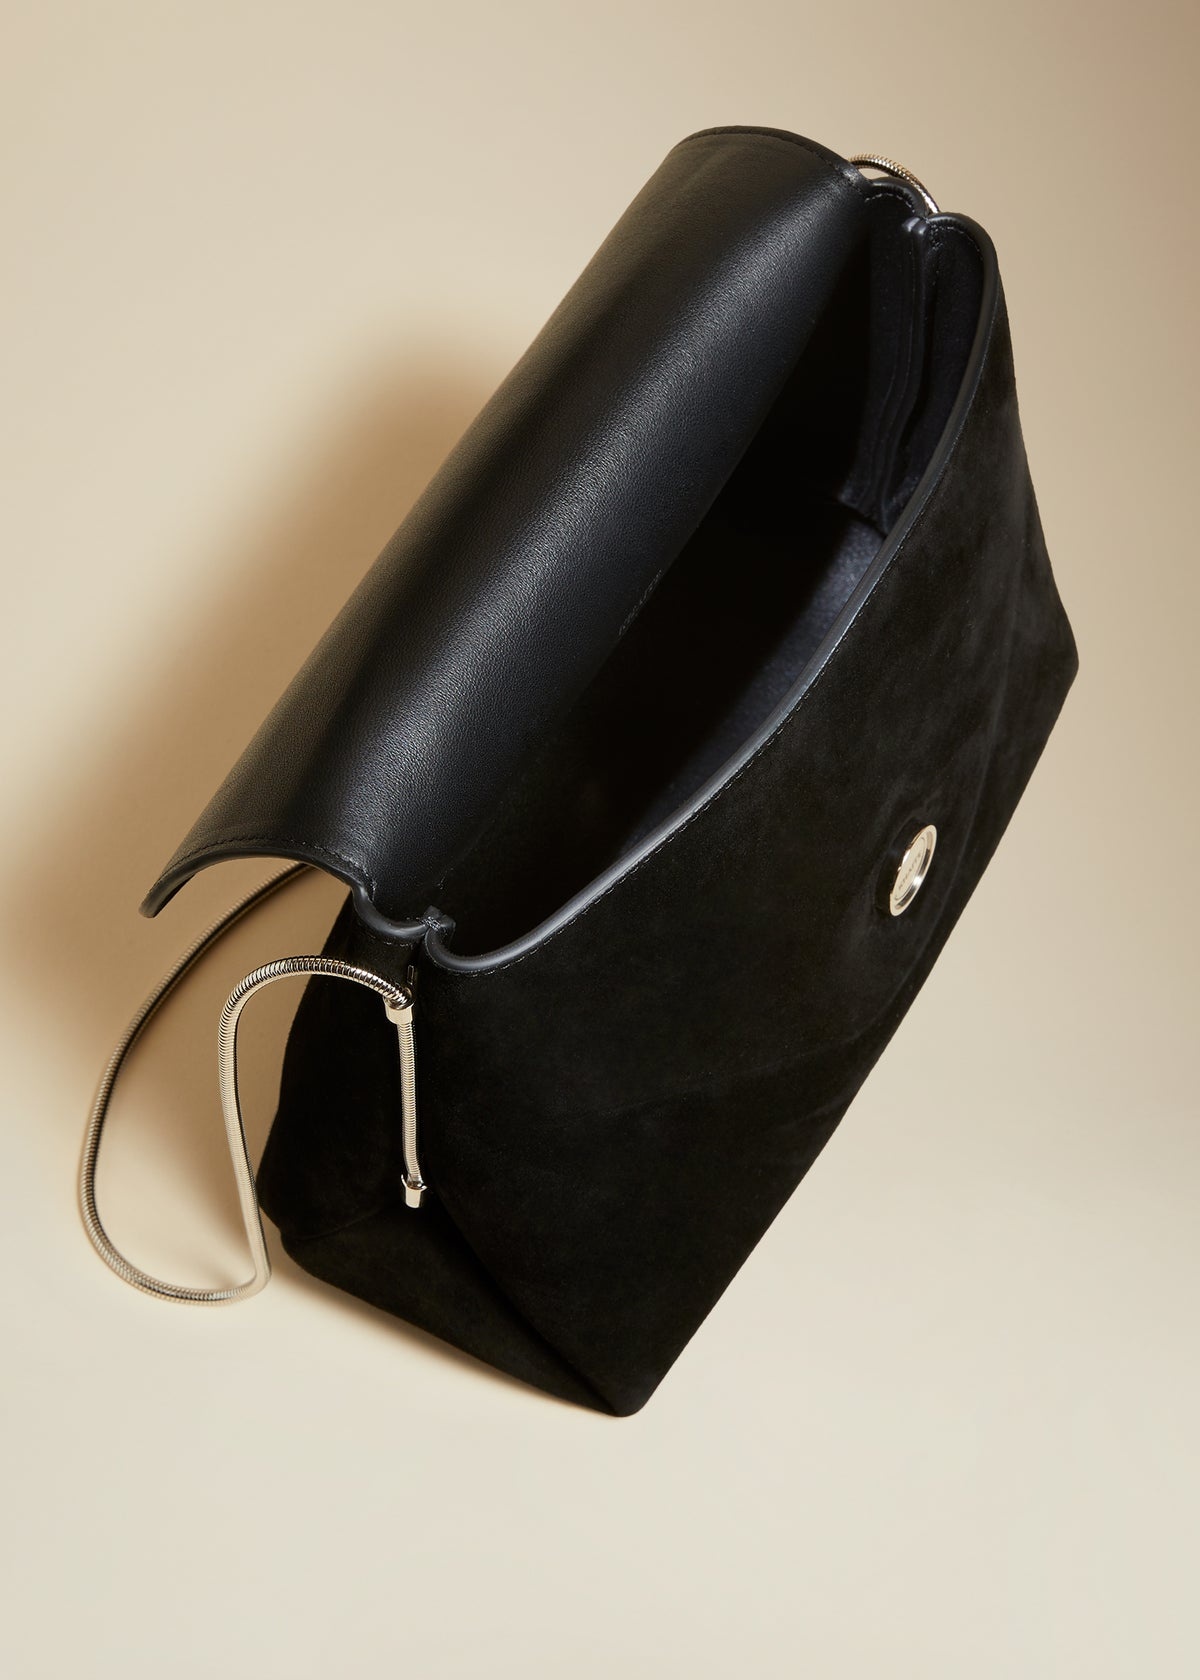 The Bobbi Bag in Black Suede - 4